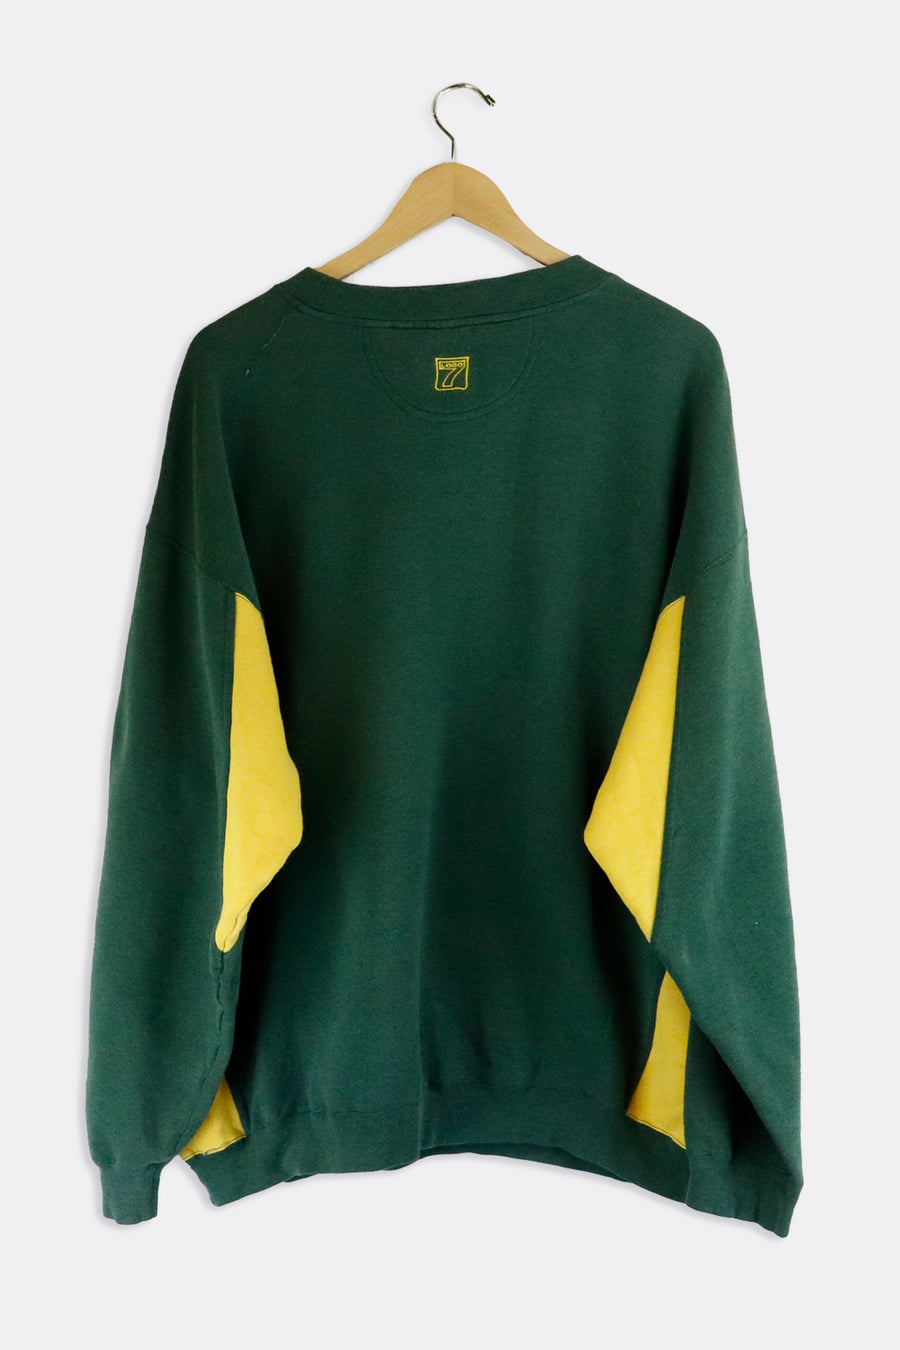 Vintage NFL Green Bay Packers Crewneck Sweatshirt Sz XL